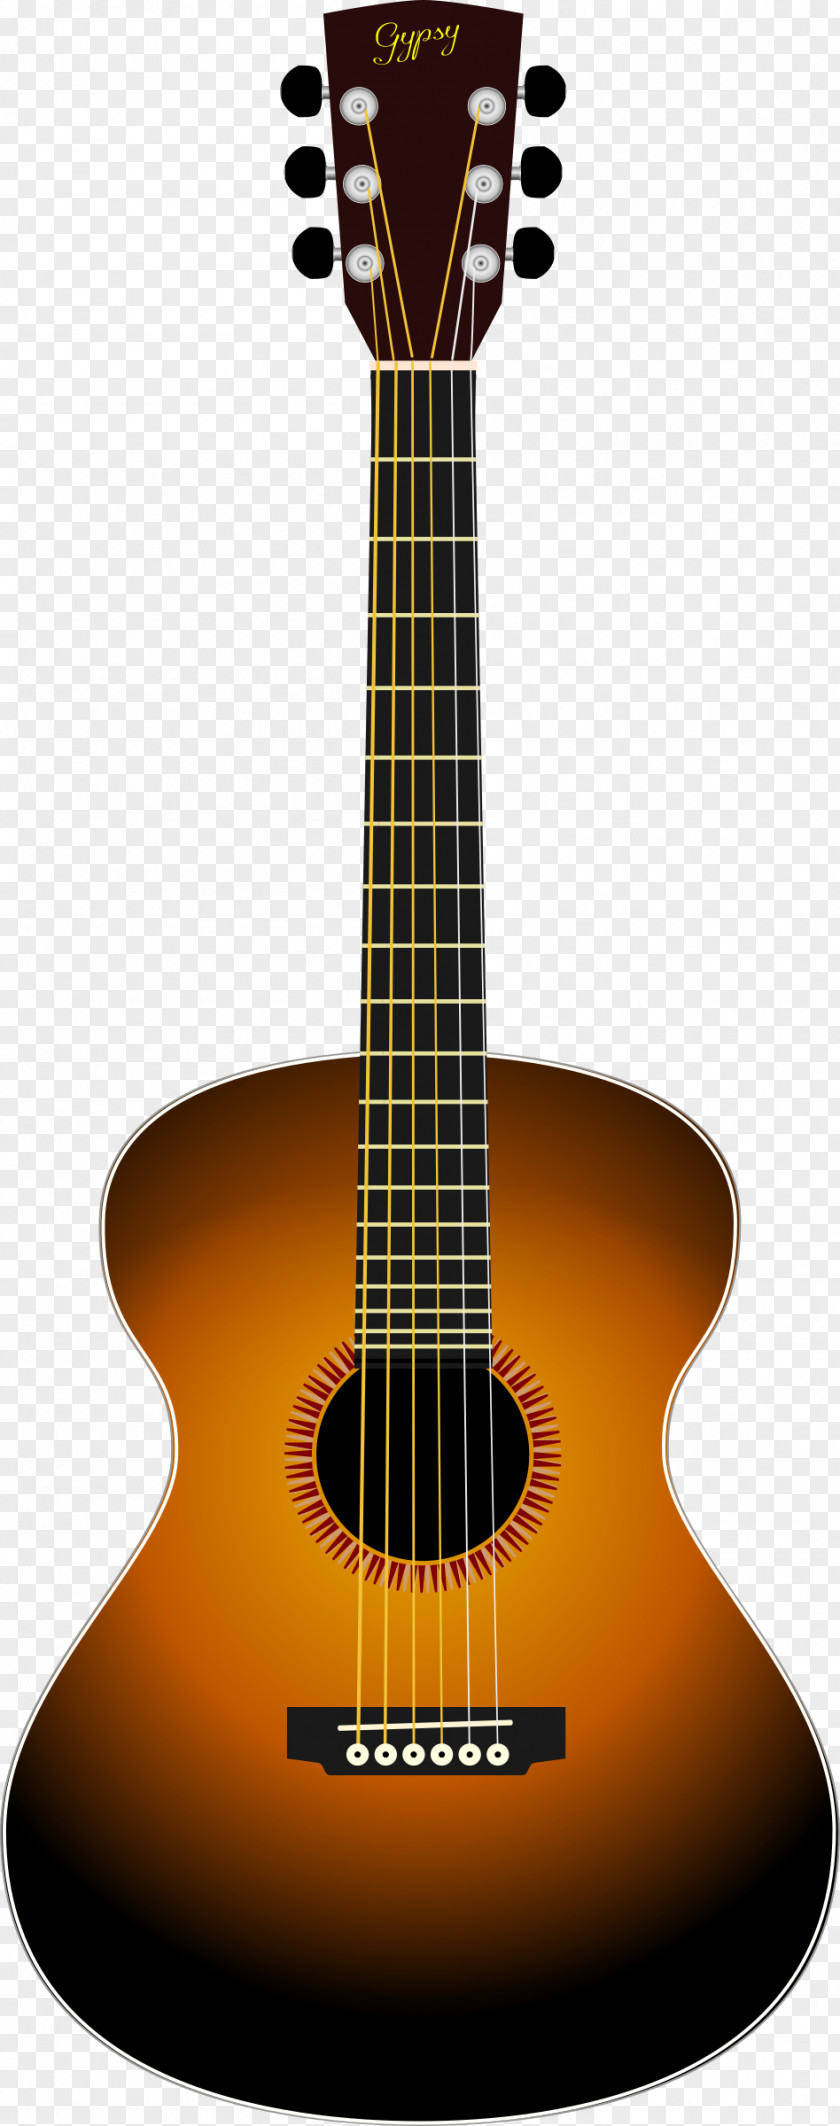 Sunburst Gibson Flying V Steel-string Acoustic Guitar Clip Art PNG